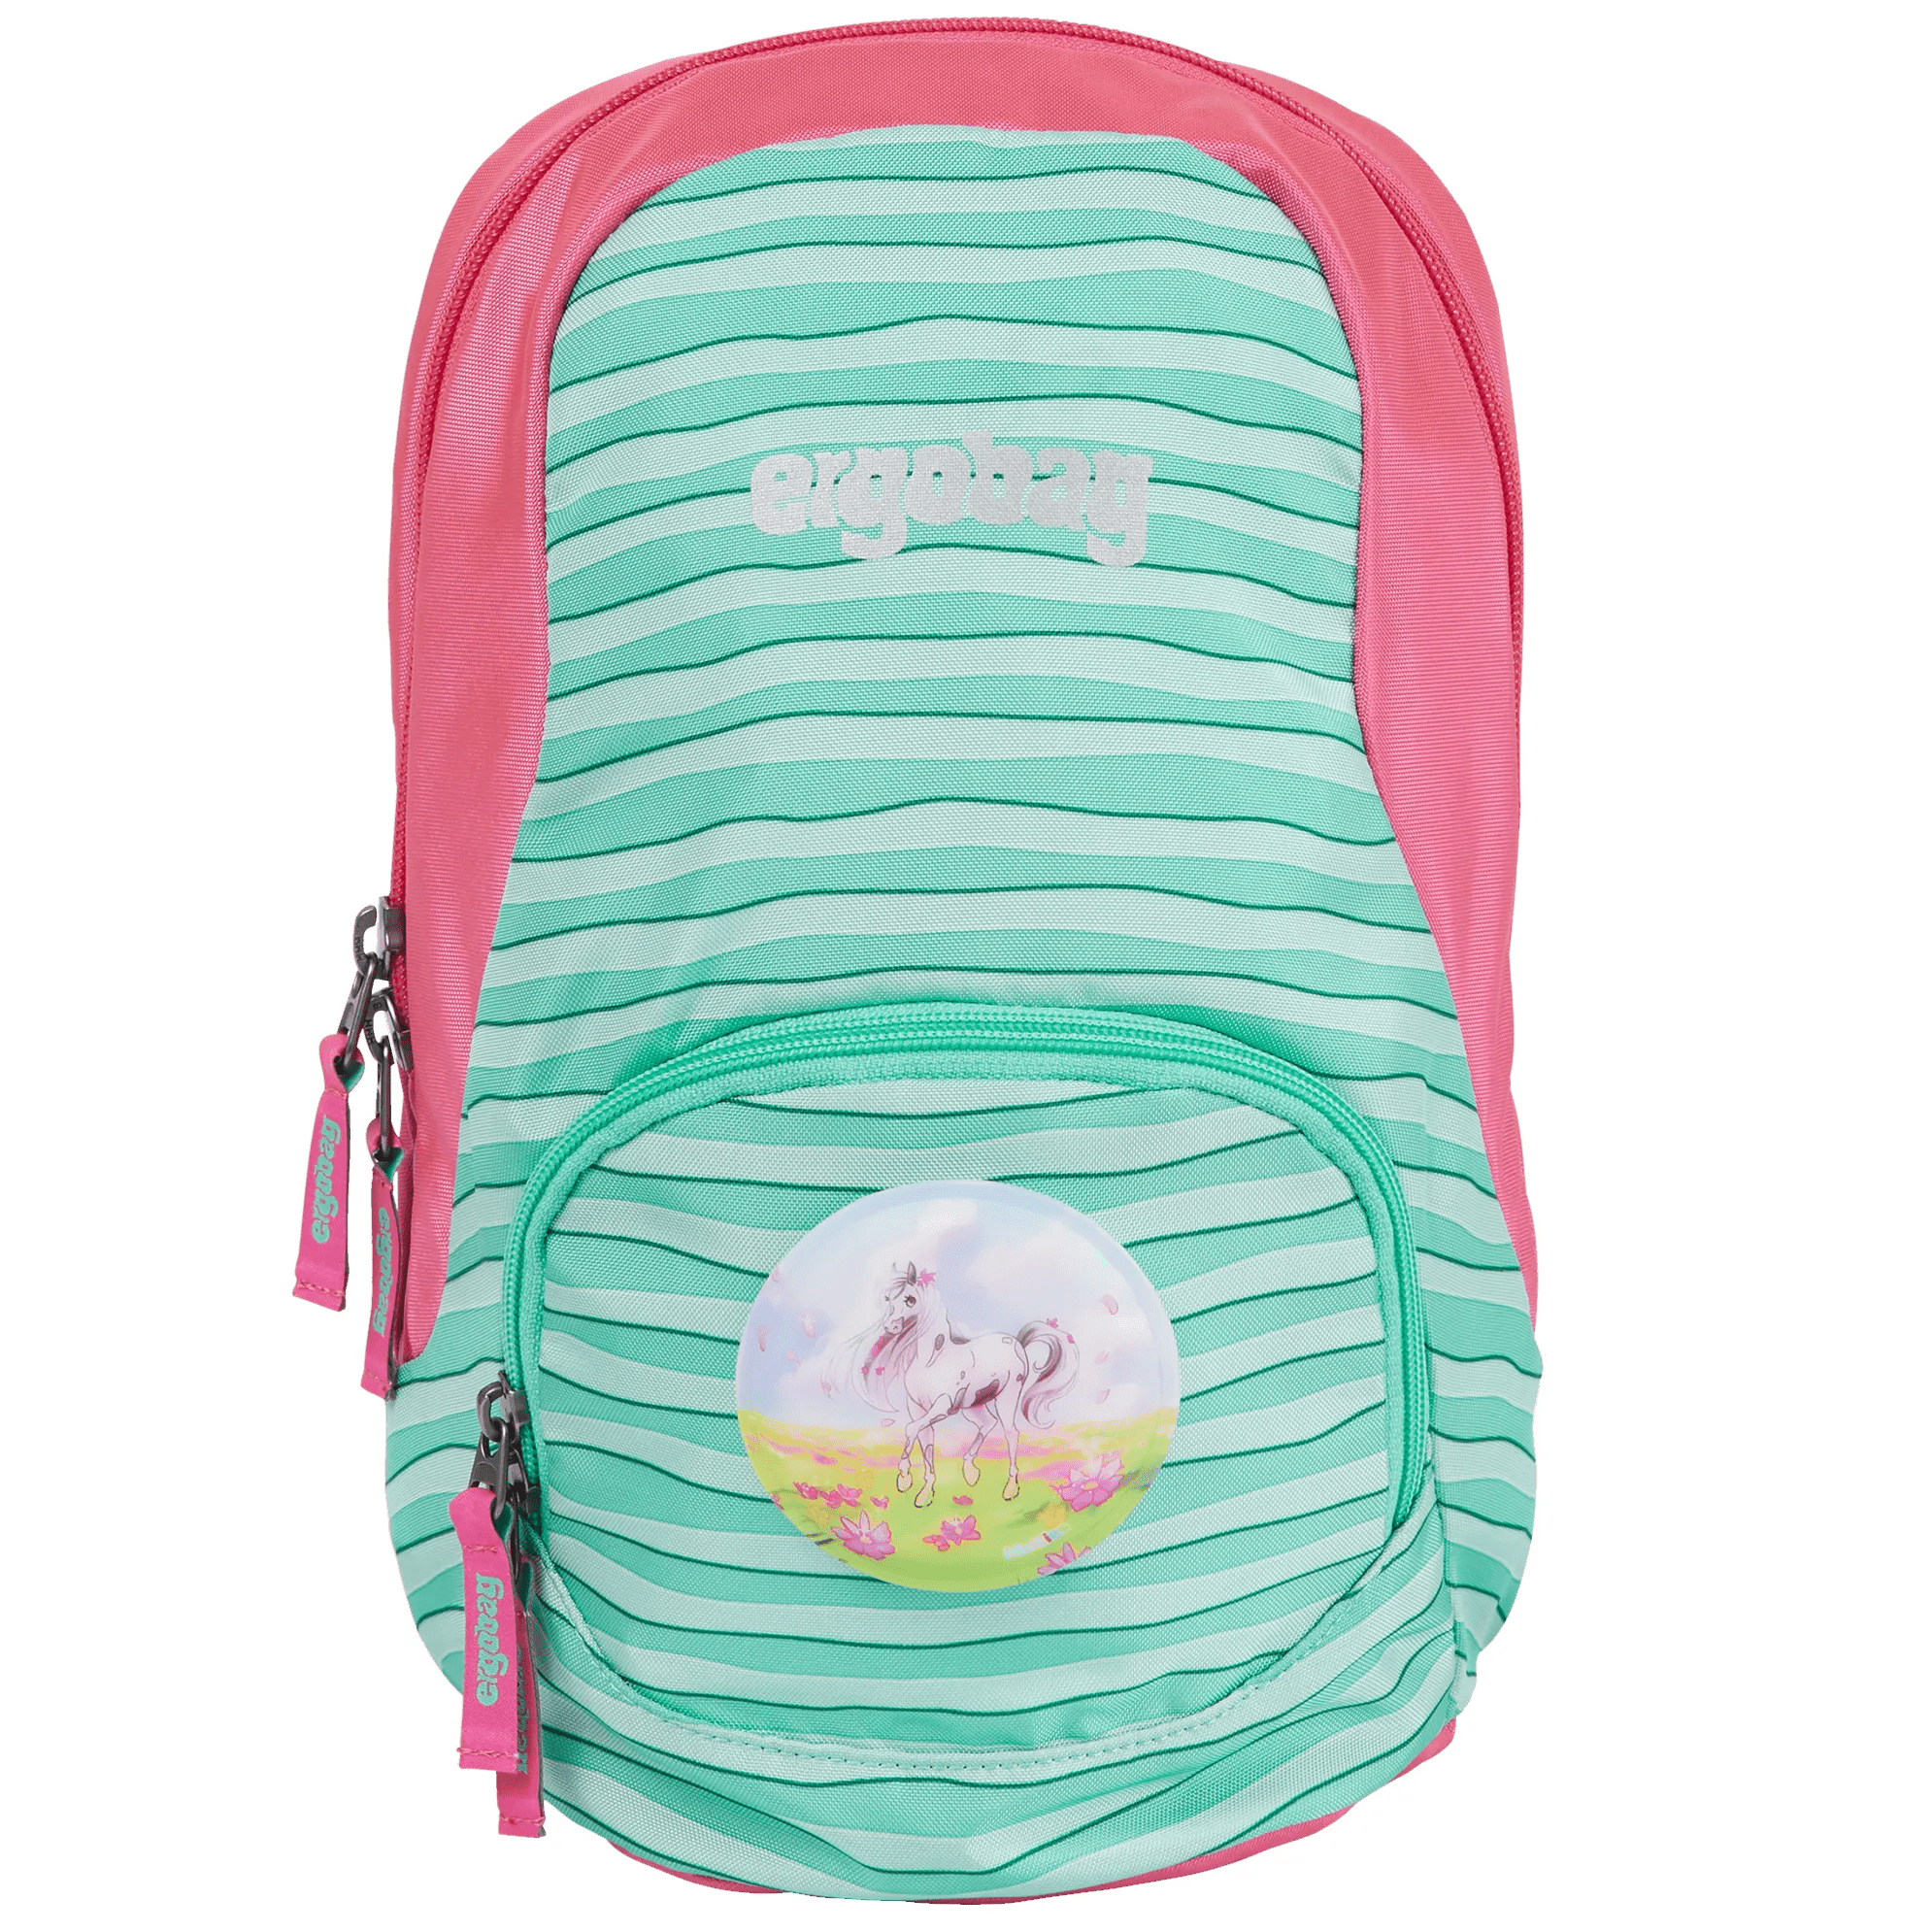 Ergobag Ease Small children's backpack 30 cm - Gallop